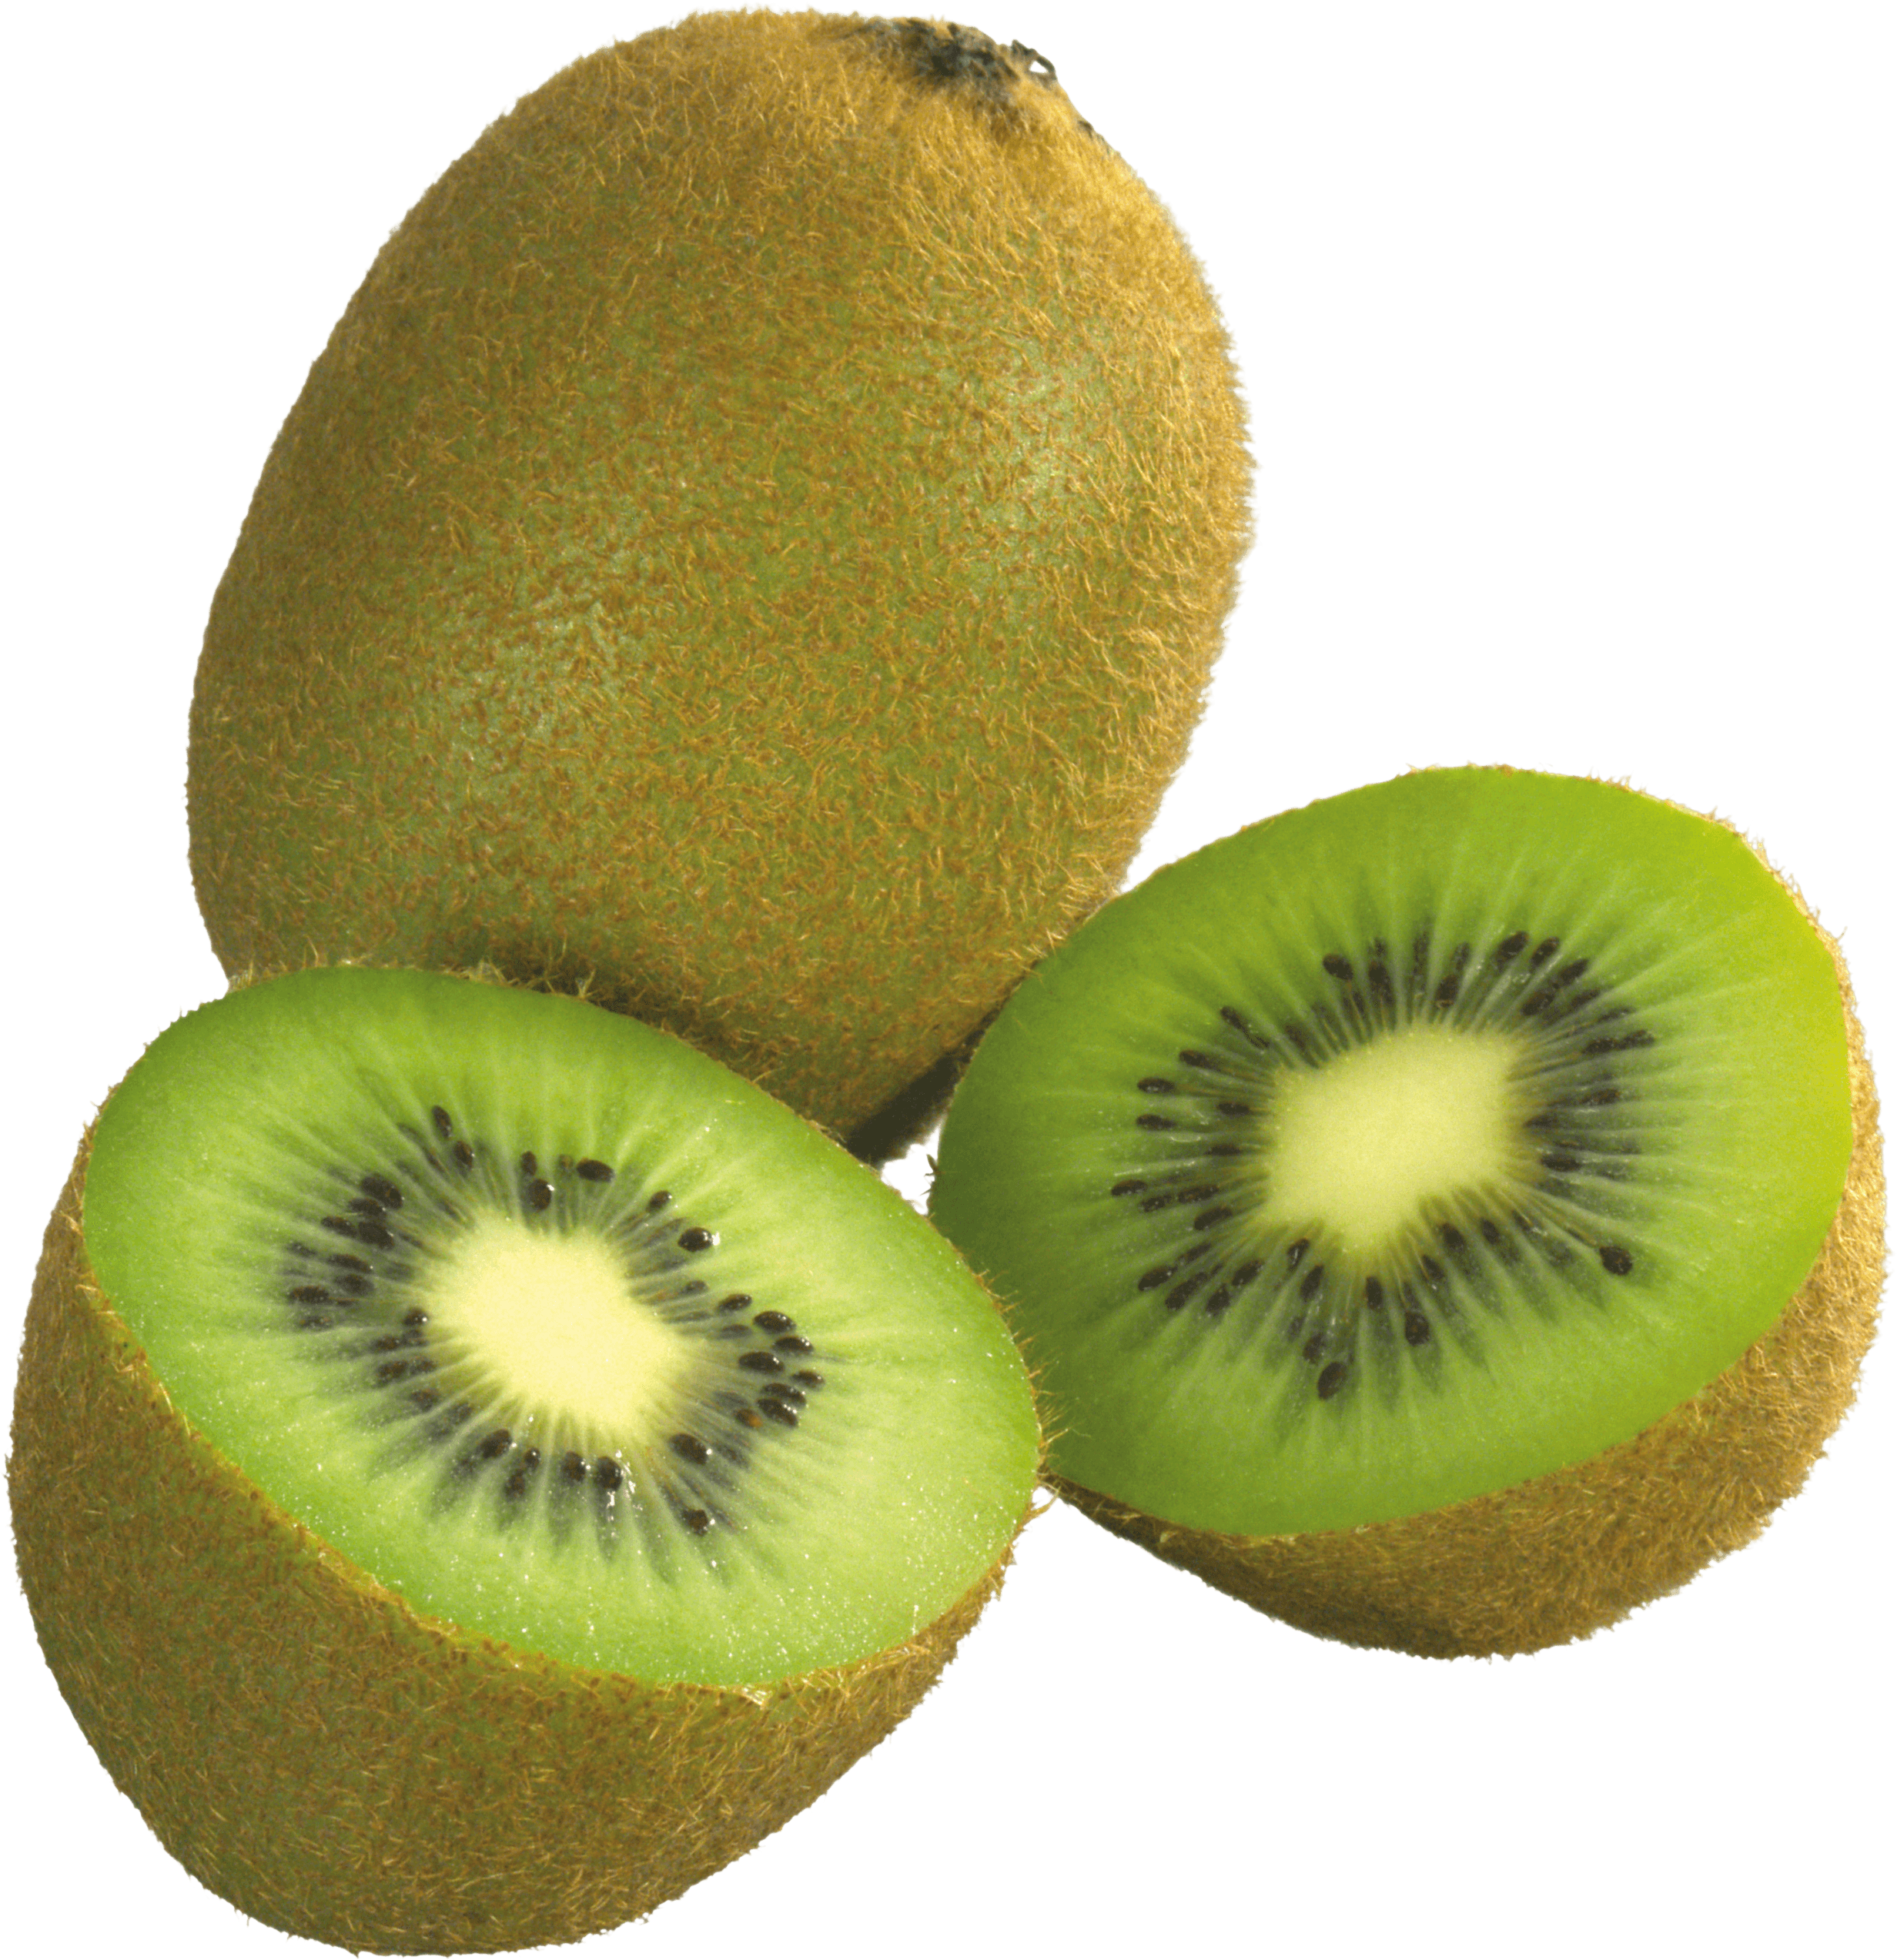 download kiwi png image fruit kiwi png pictures download #24897